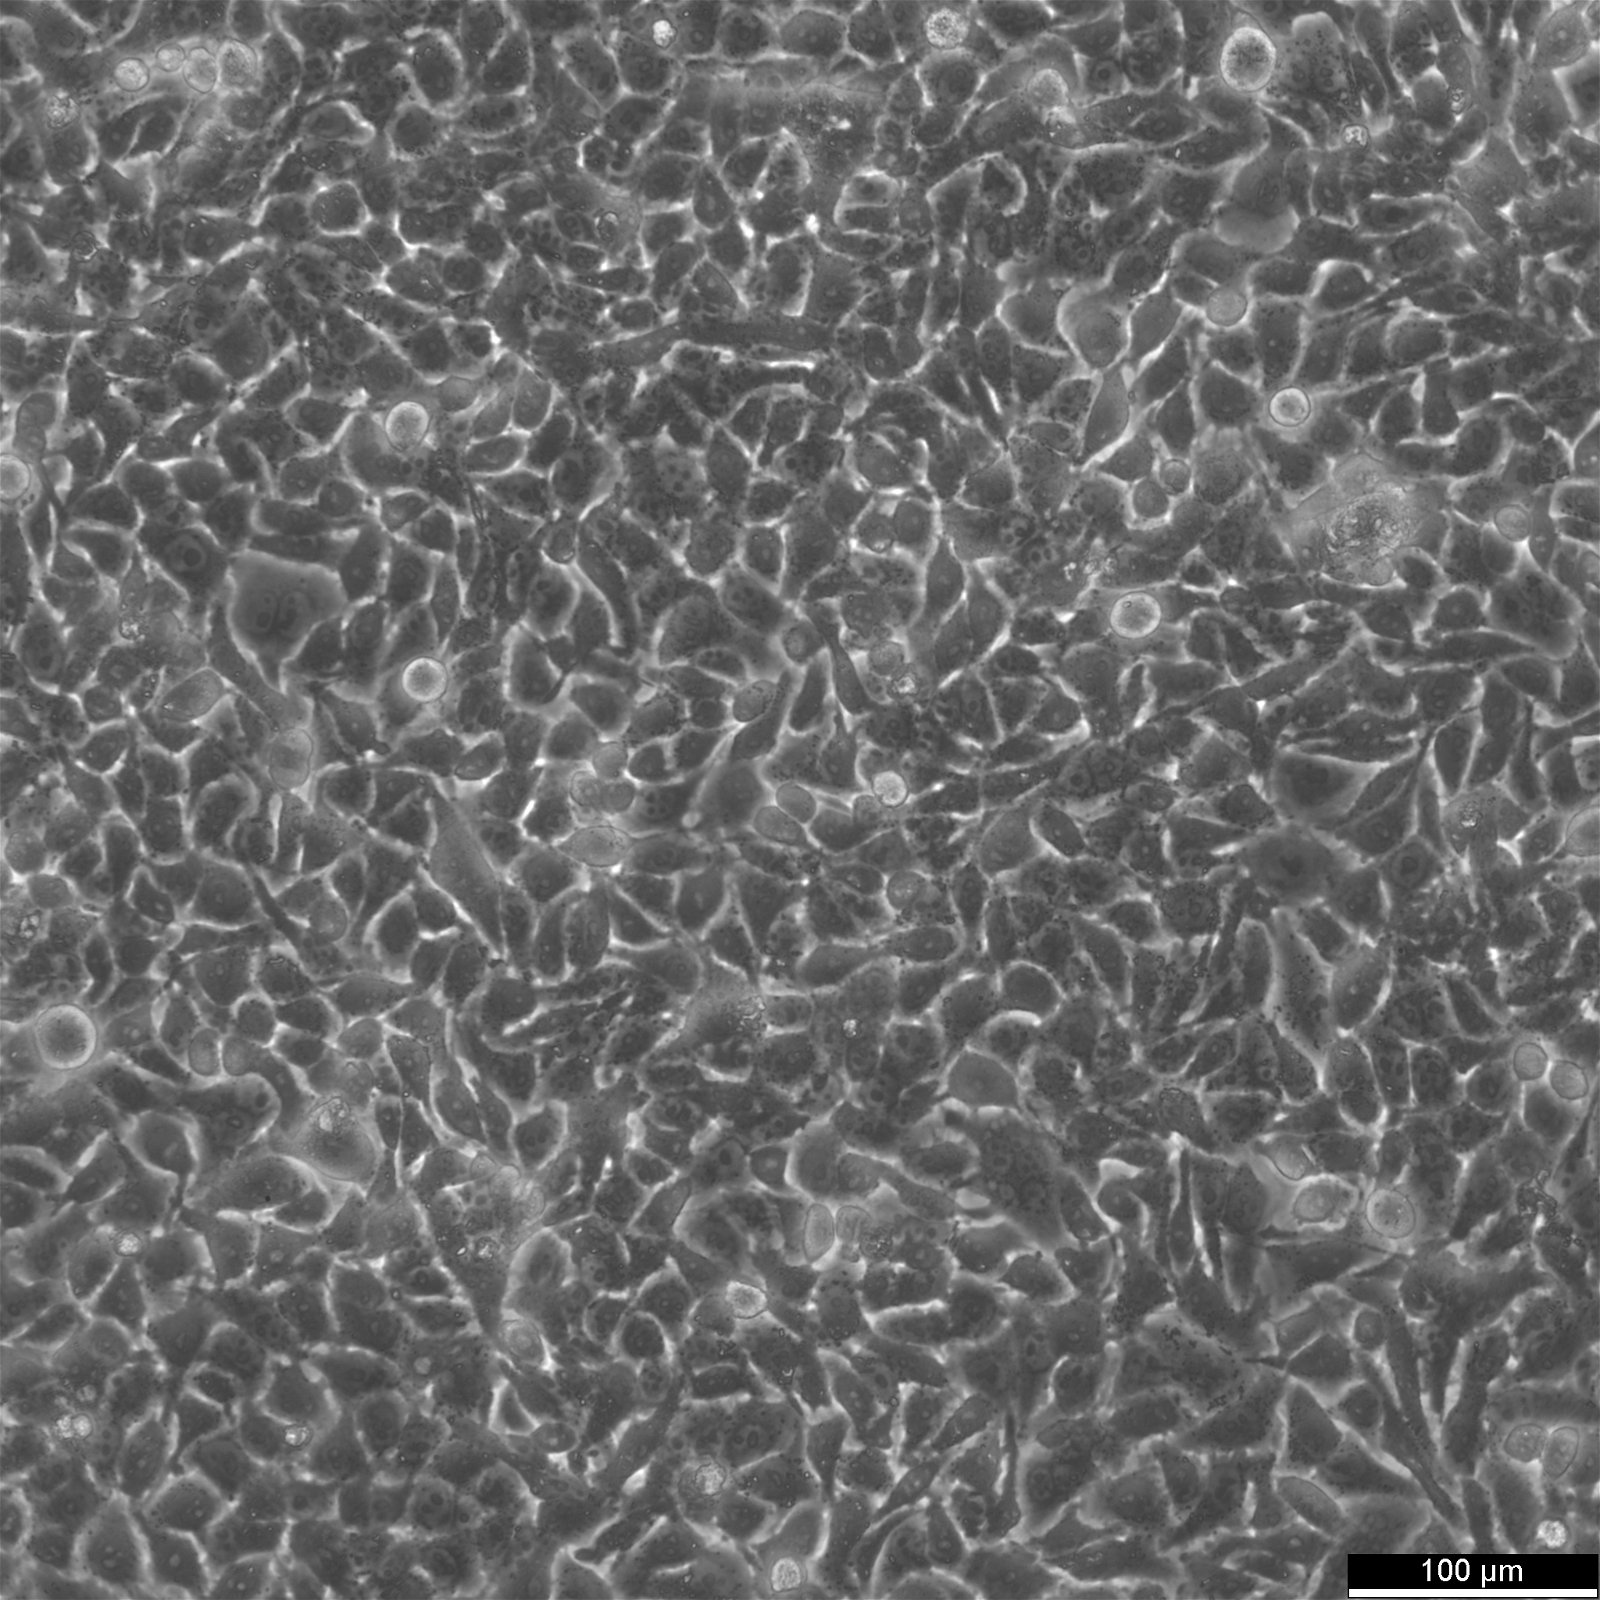 HK-CRISPR-Nup188-mEGFP #11-092 Cells